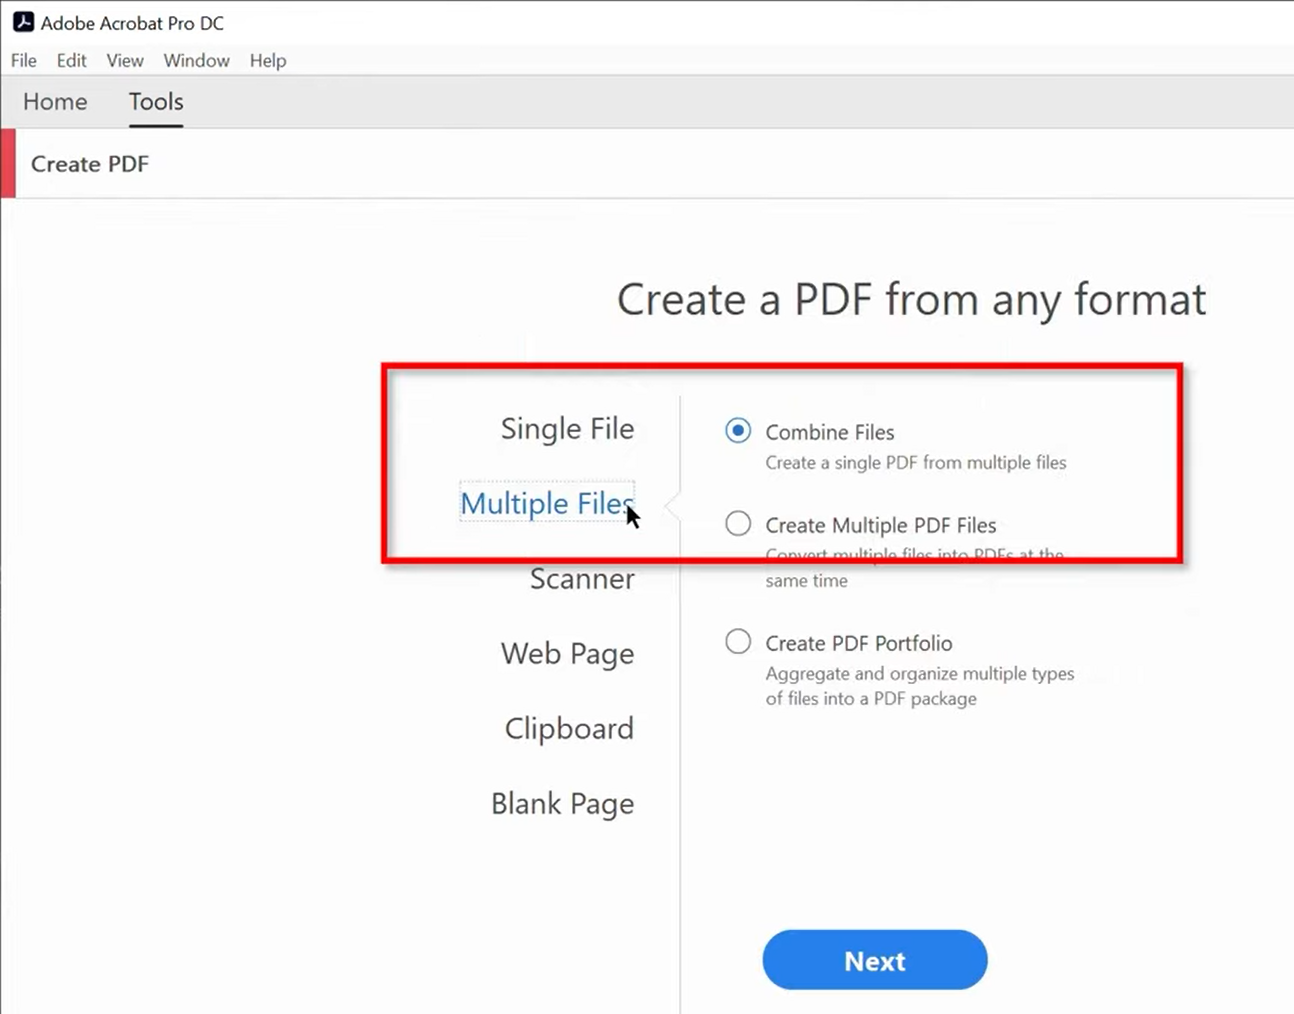 Adobe Acrobat Helps Merge PPTs Into PDF